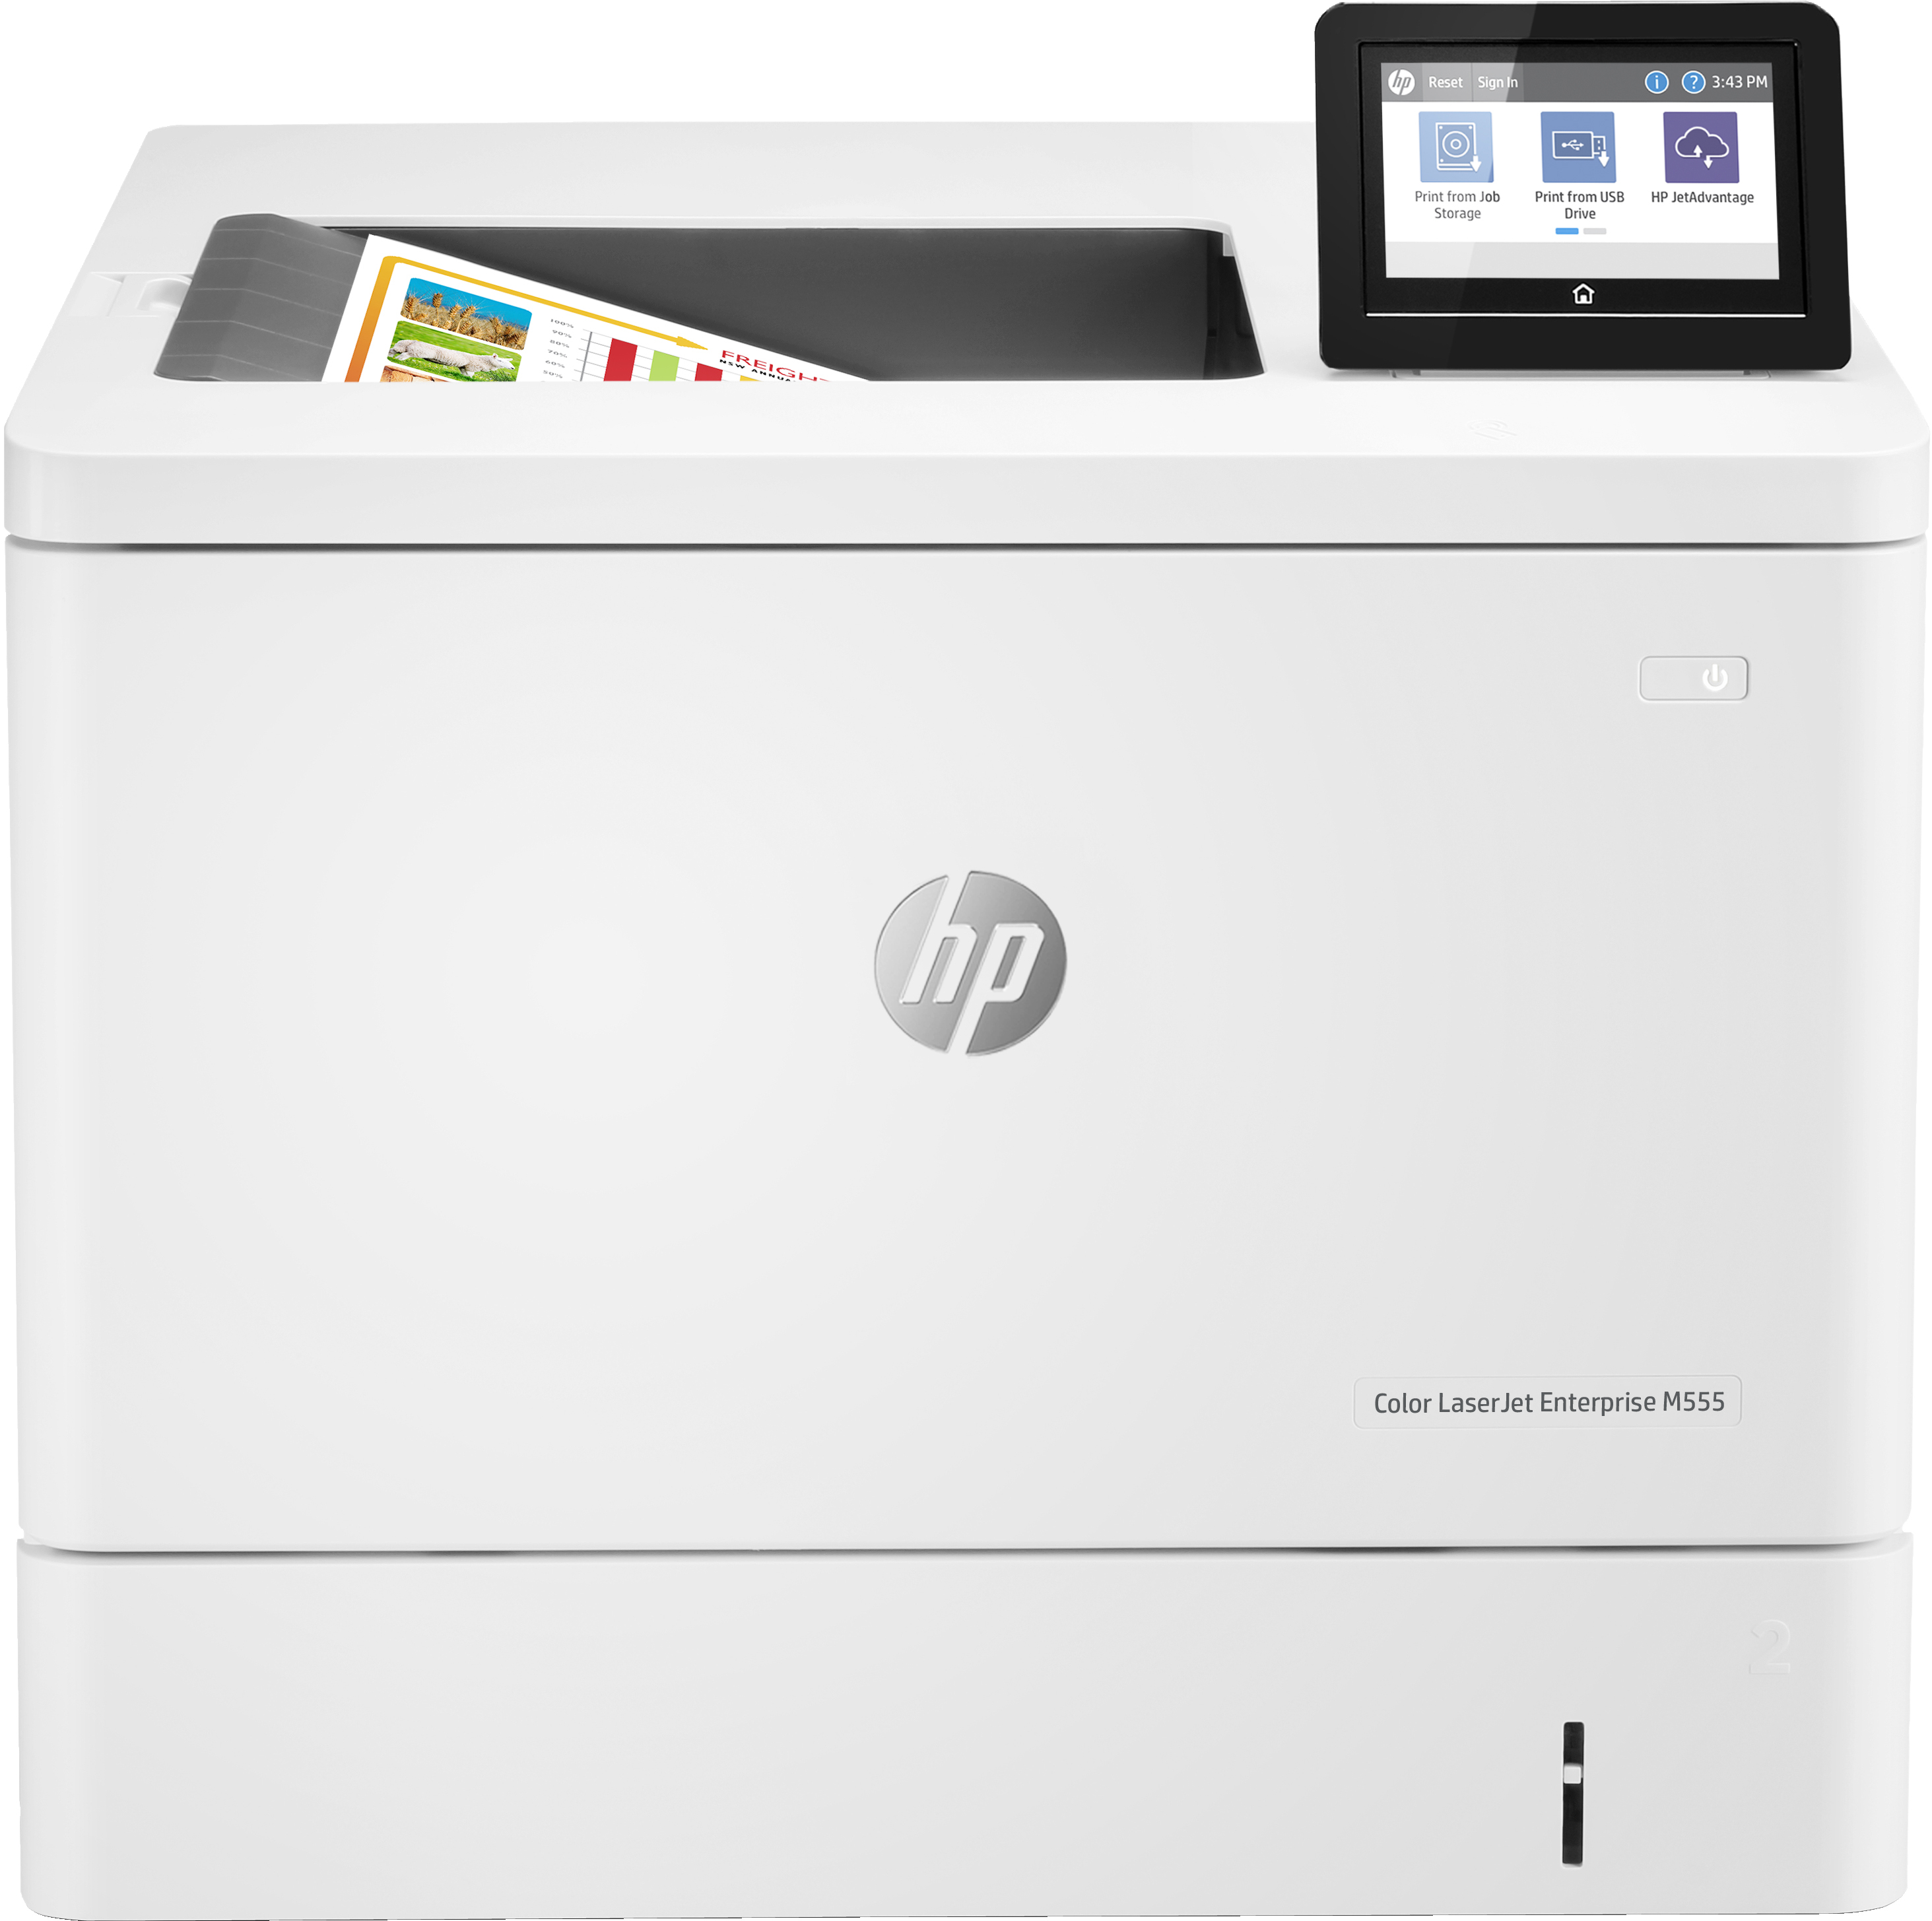 HP Color LaserJet Enterprise M555dn, Utskrift, Dubbelsidig utskrift